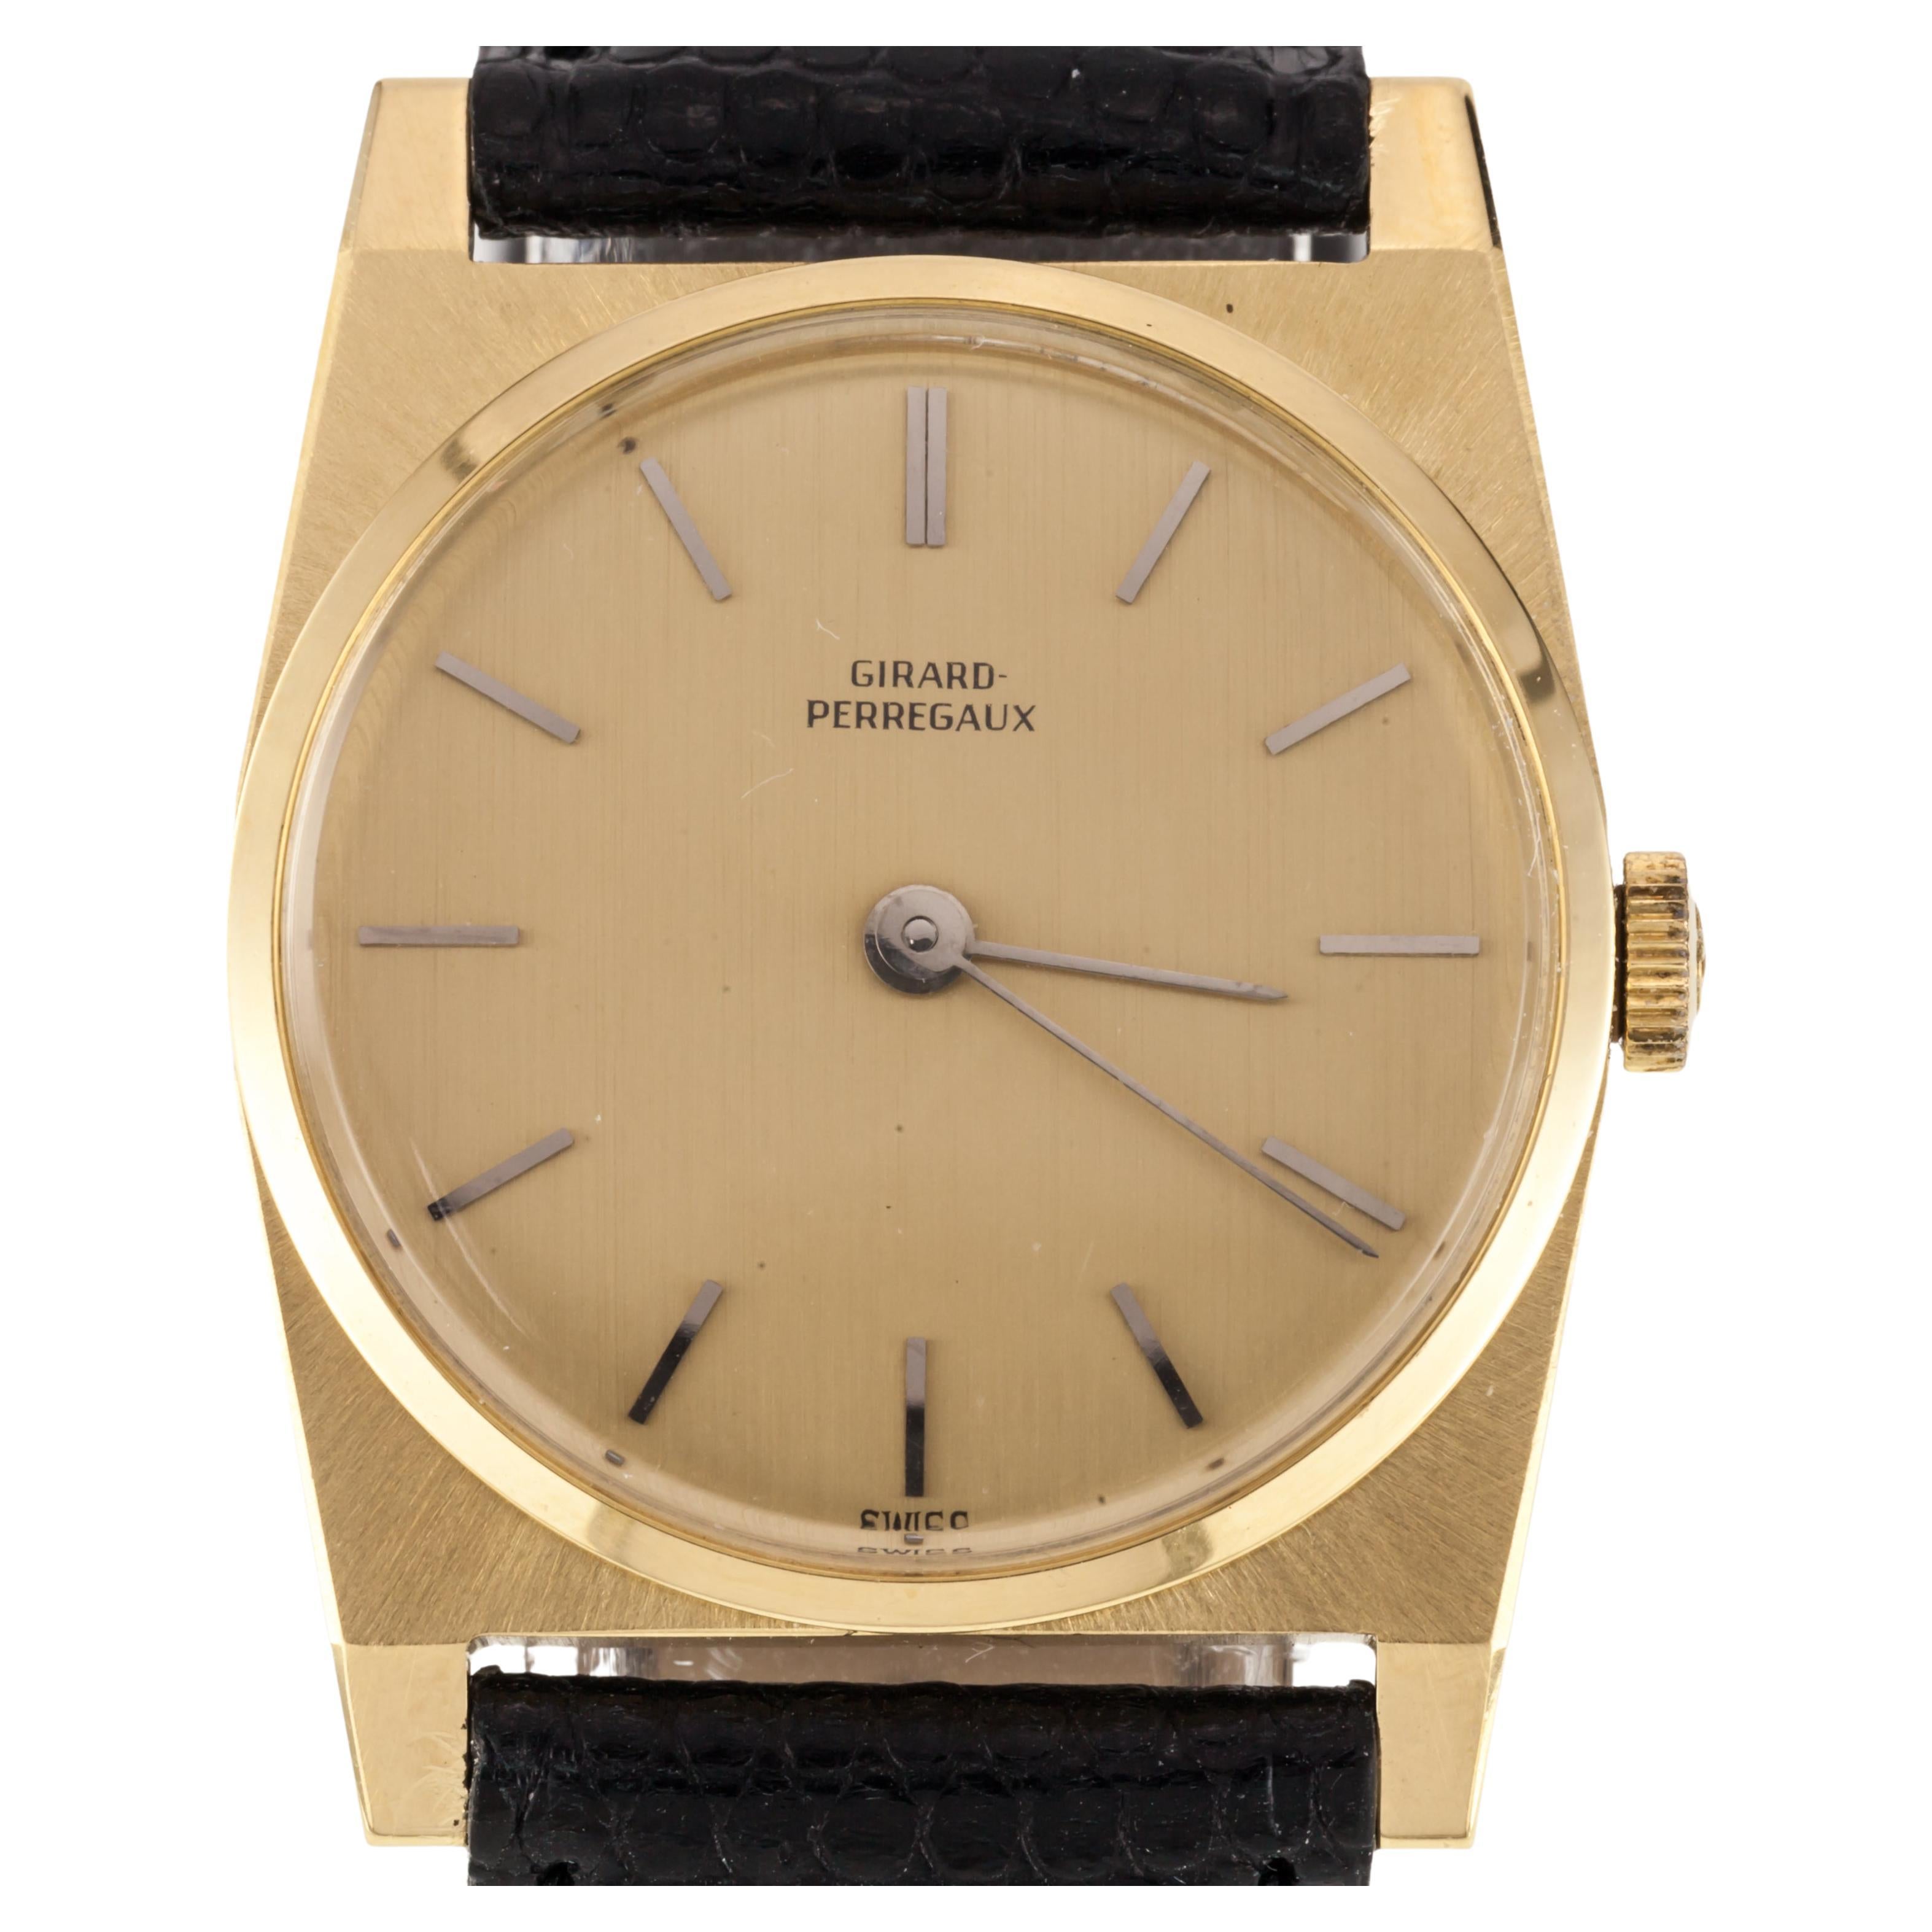 Girard Perregaux Women's 18k Yellow Gold Hand-Winding Watch, Leather Band, 8592V